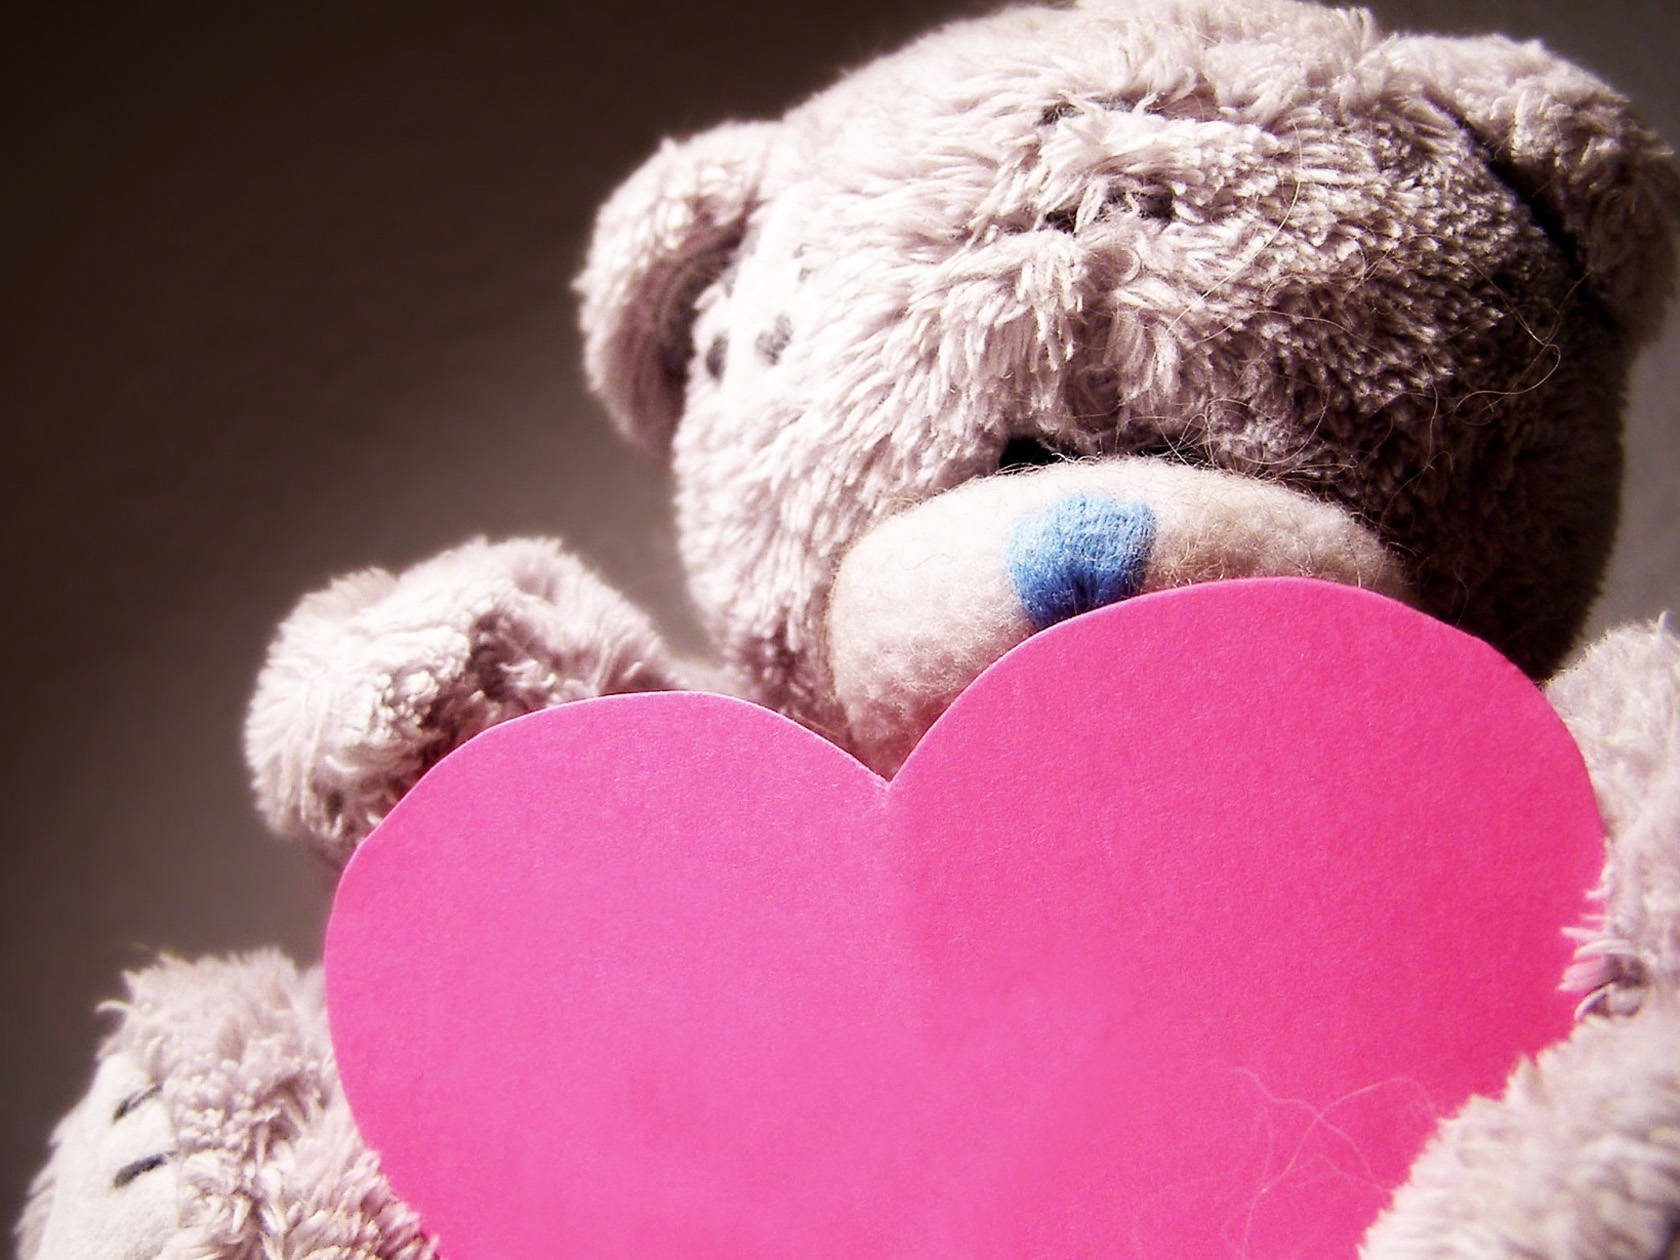 Big Pink Heart And Teddy Bear